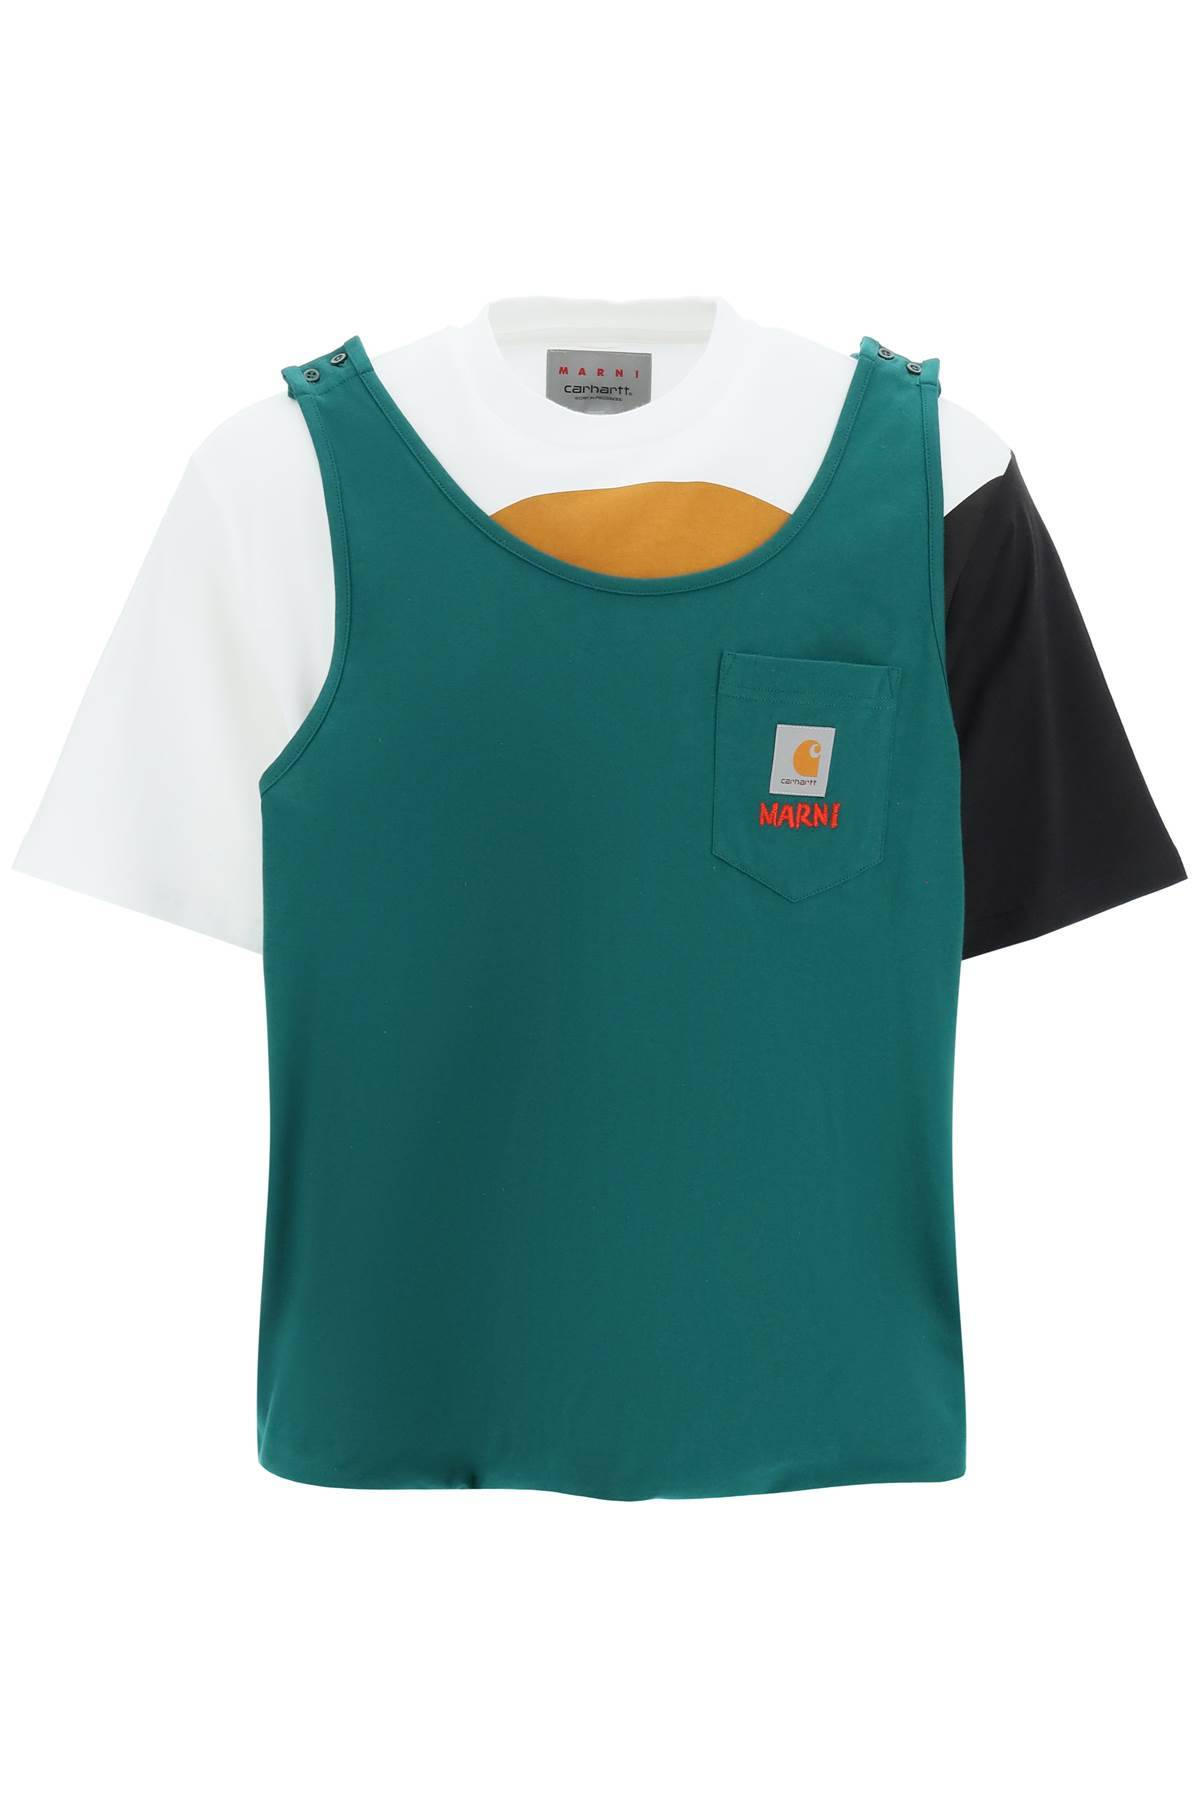 MARNI X CARHARTT MARNI X CARHARTT t-shirt with sewn-in tank top